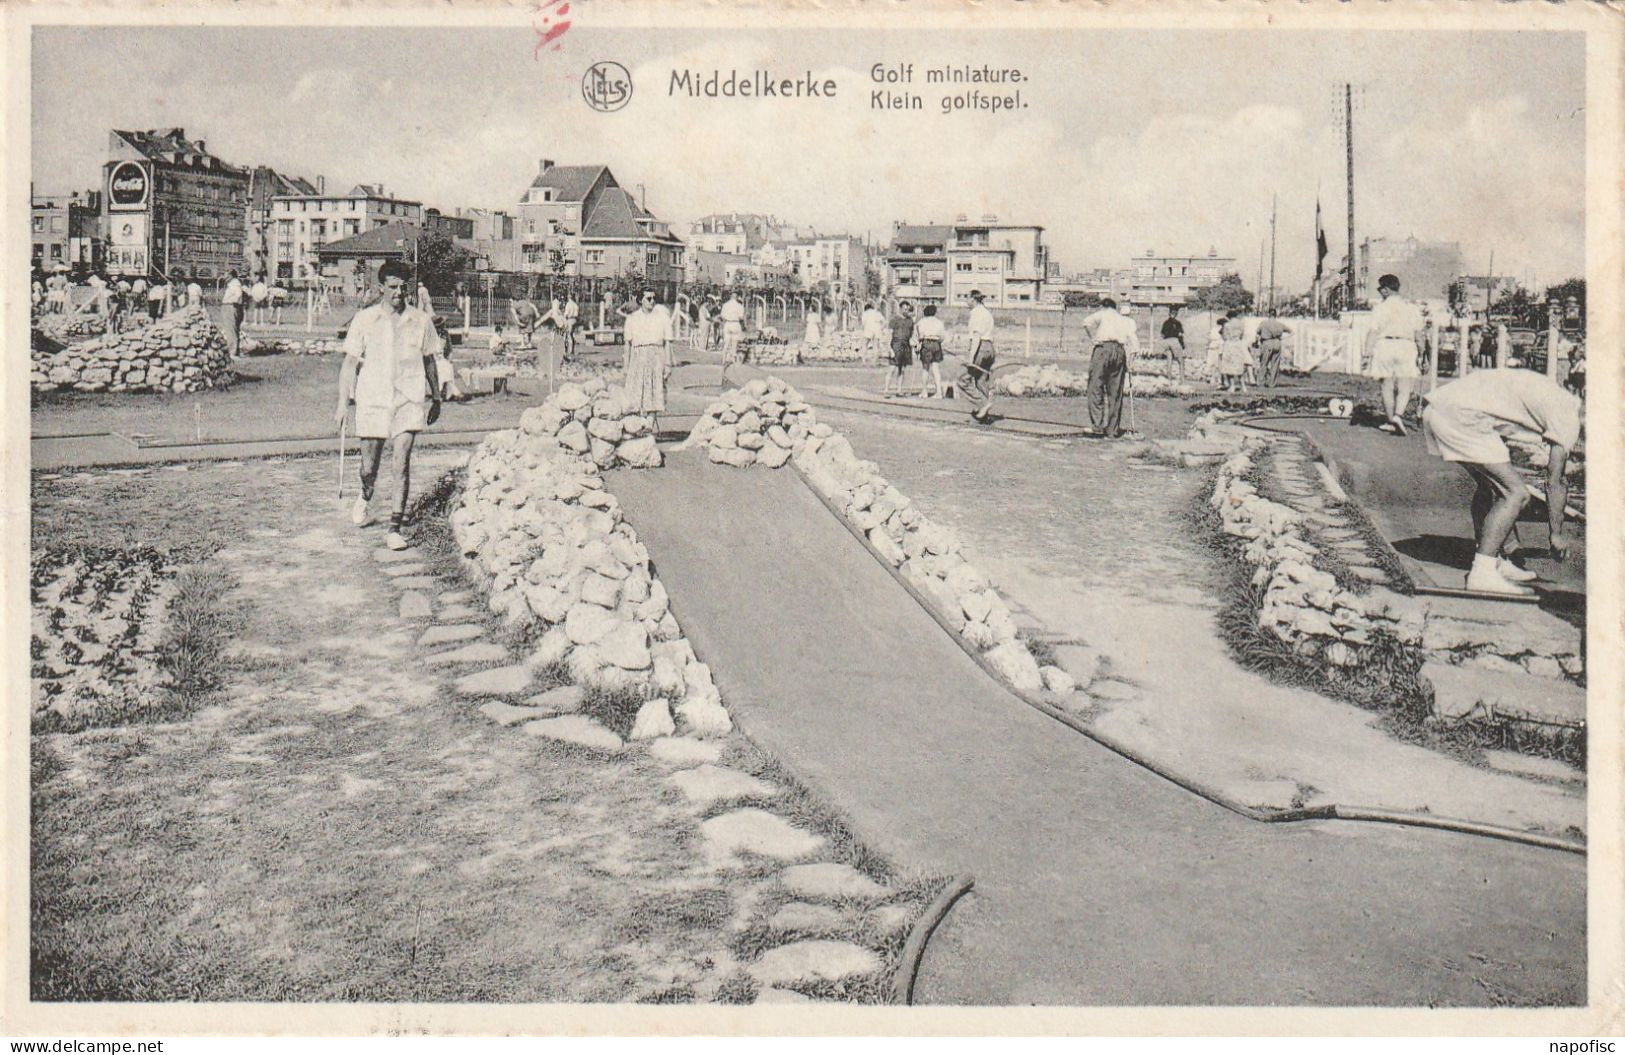 104-Middelkerke Klein Golfspel  Golf Miniature - Middelkerke